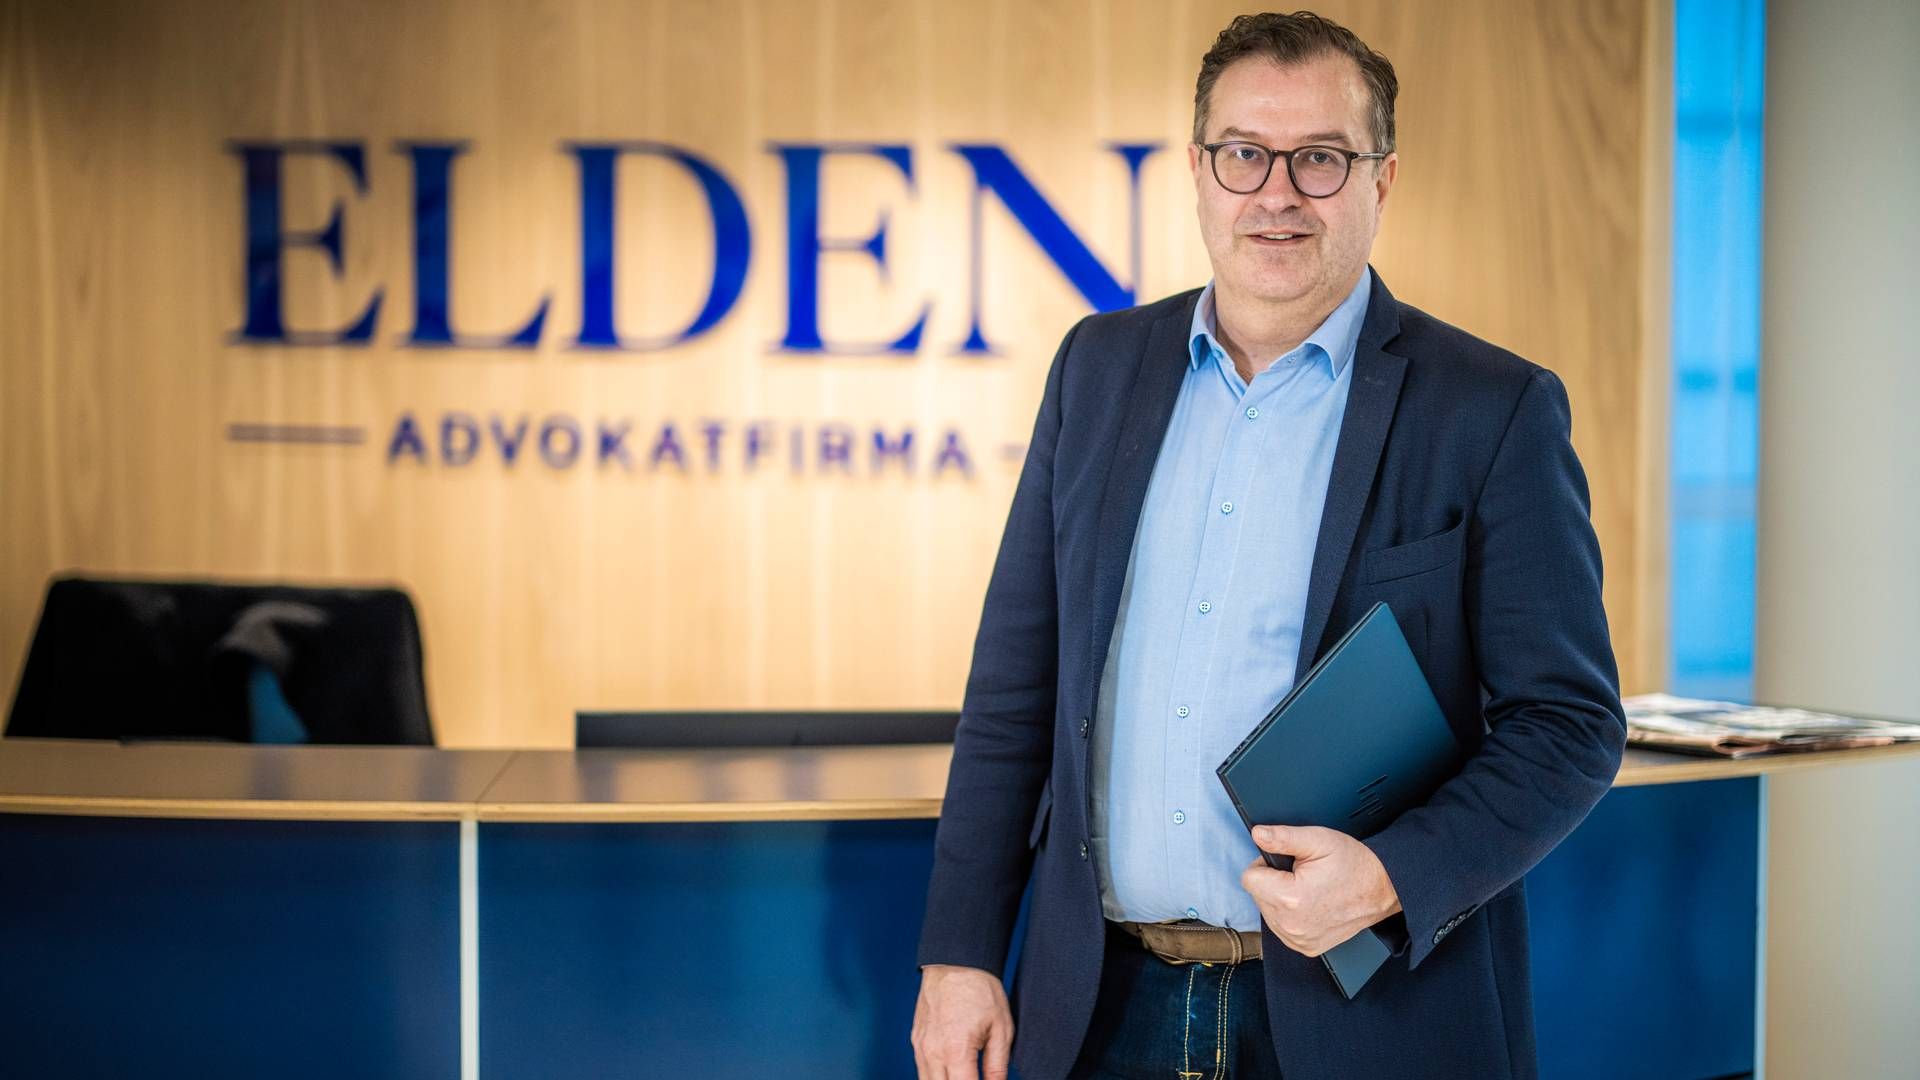 25 ÅR: Anders Brosveet har vært managing partner i Elden siden 1998. Han er også fagansvarlig for økonomisk strafferett i advokatfirmaet. | Foto: Ole Berg-Rusten/NTB